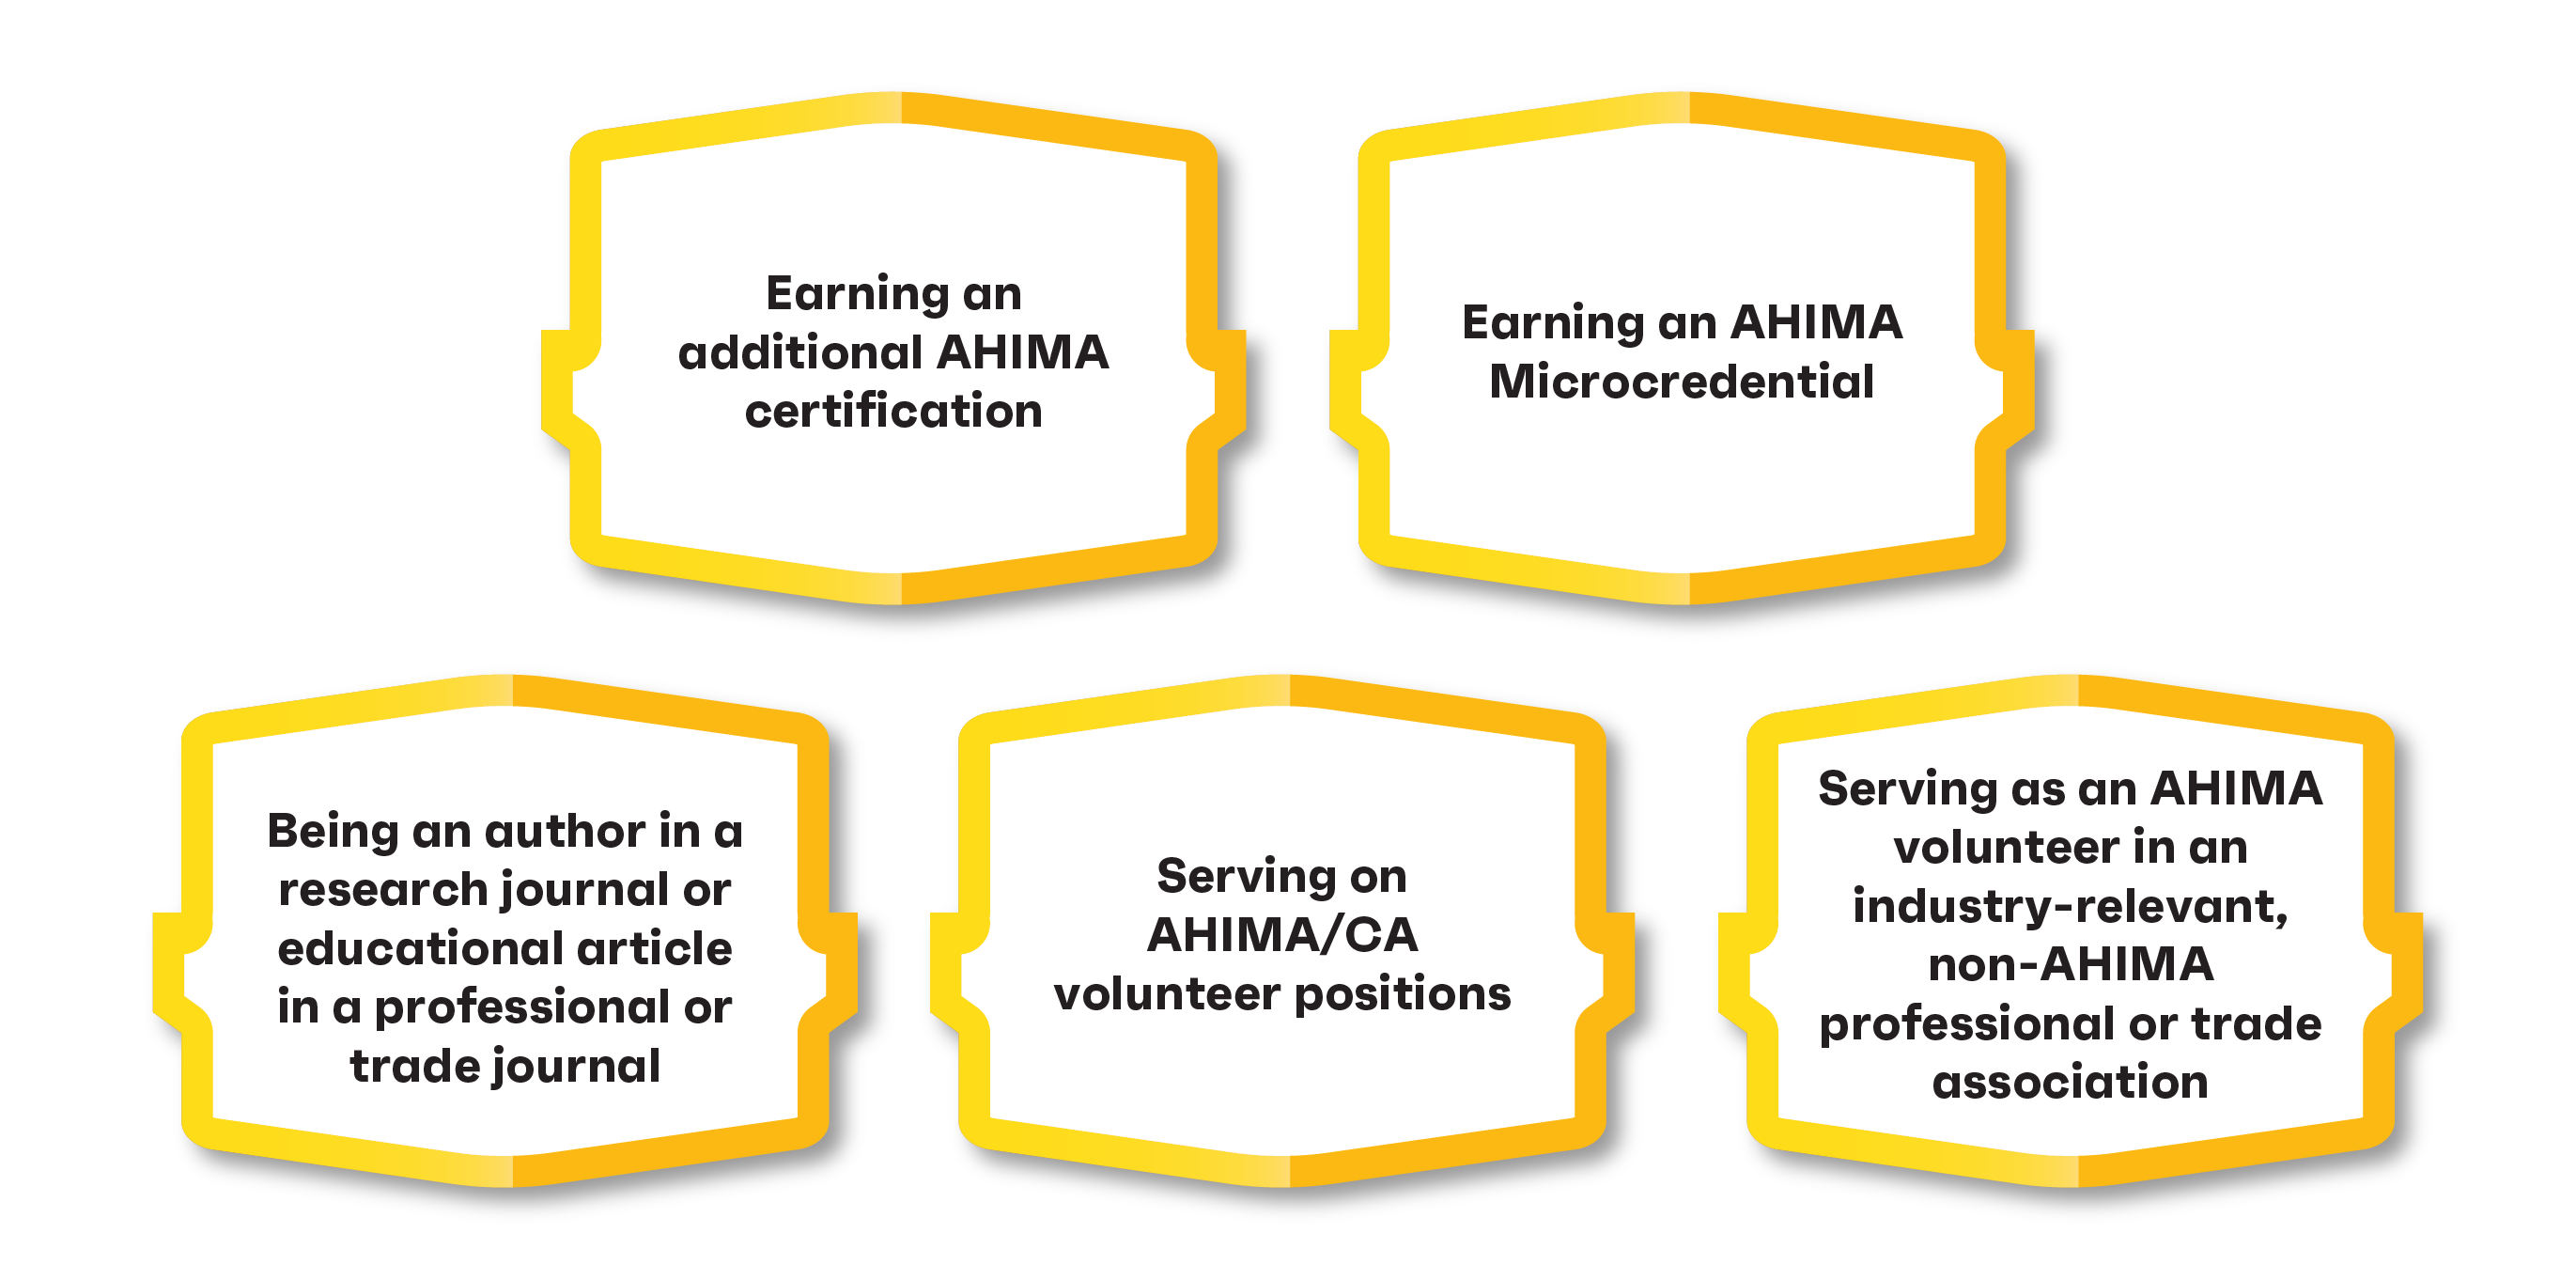 Earning an AHIMA certification